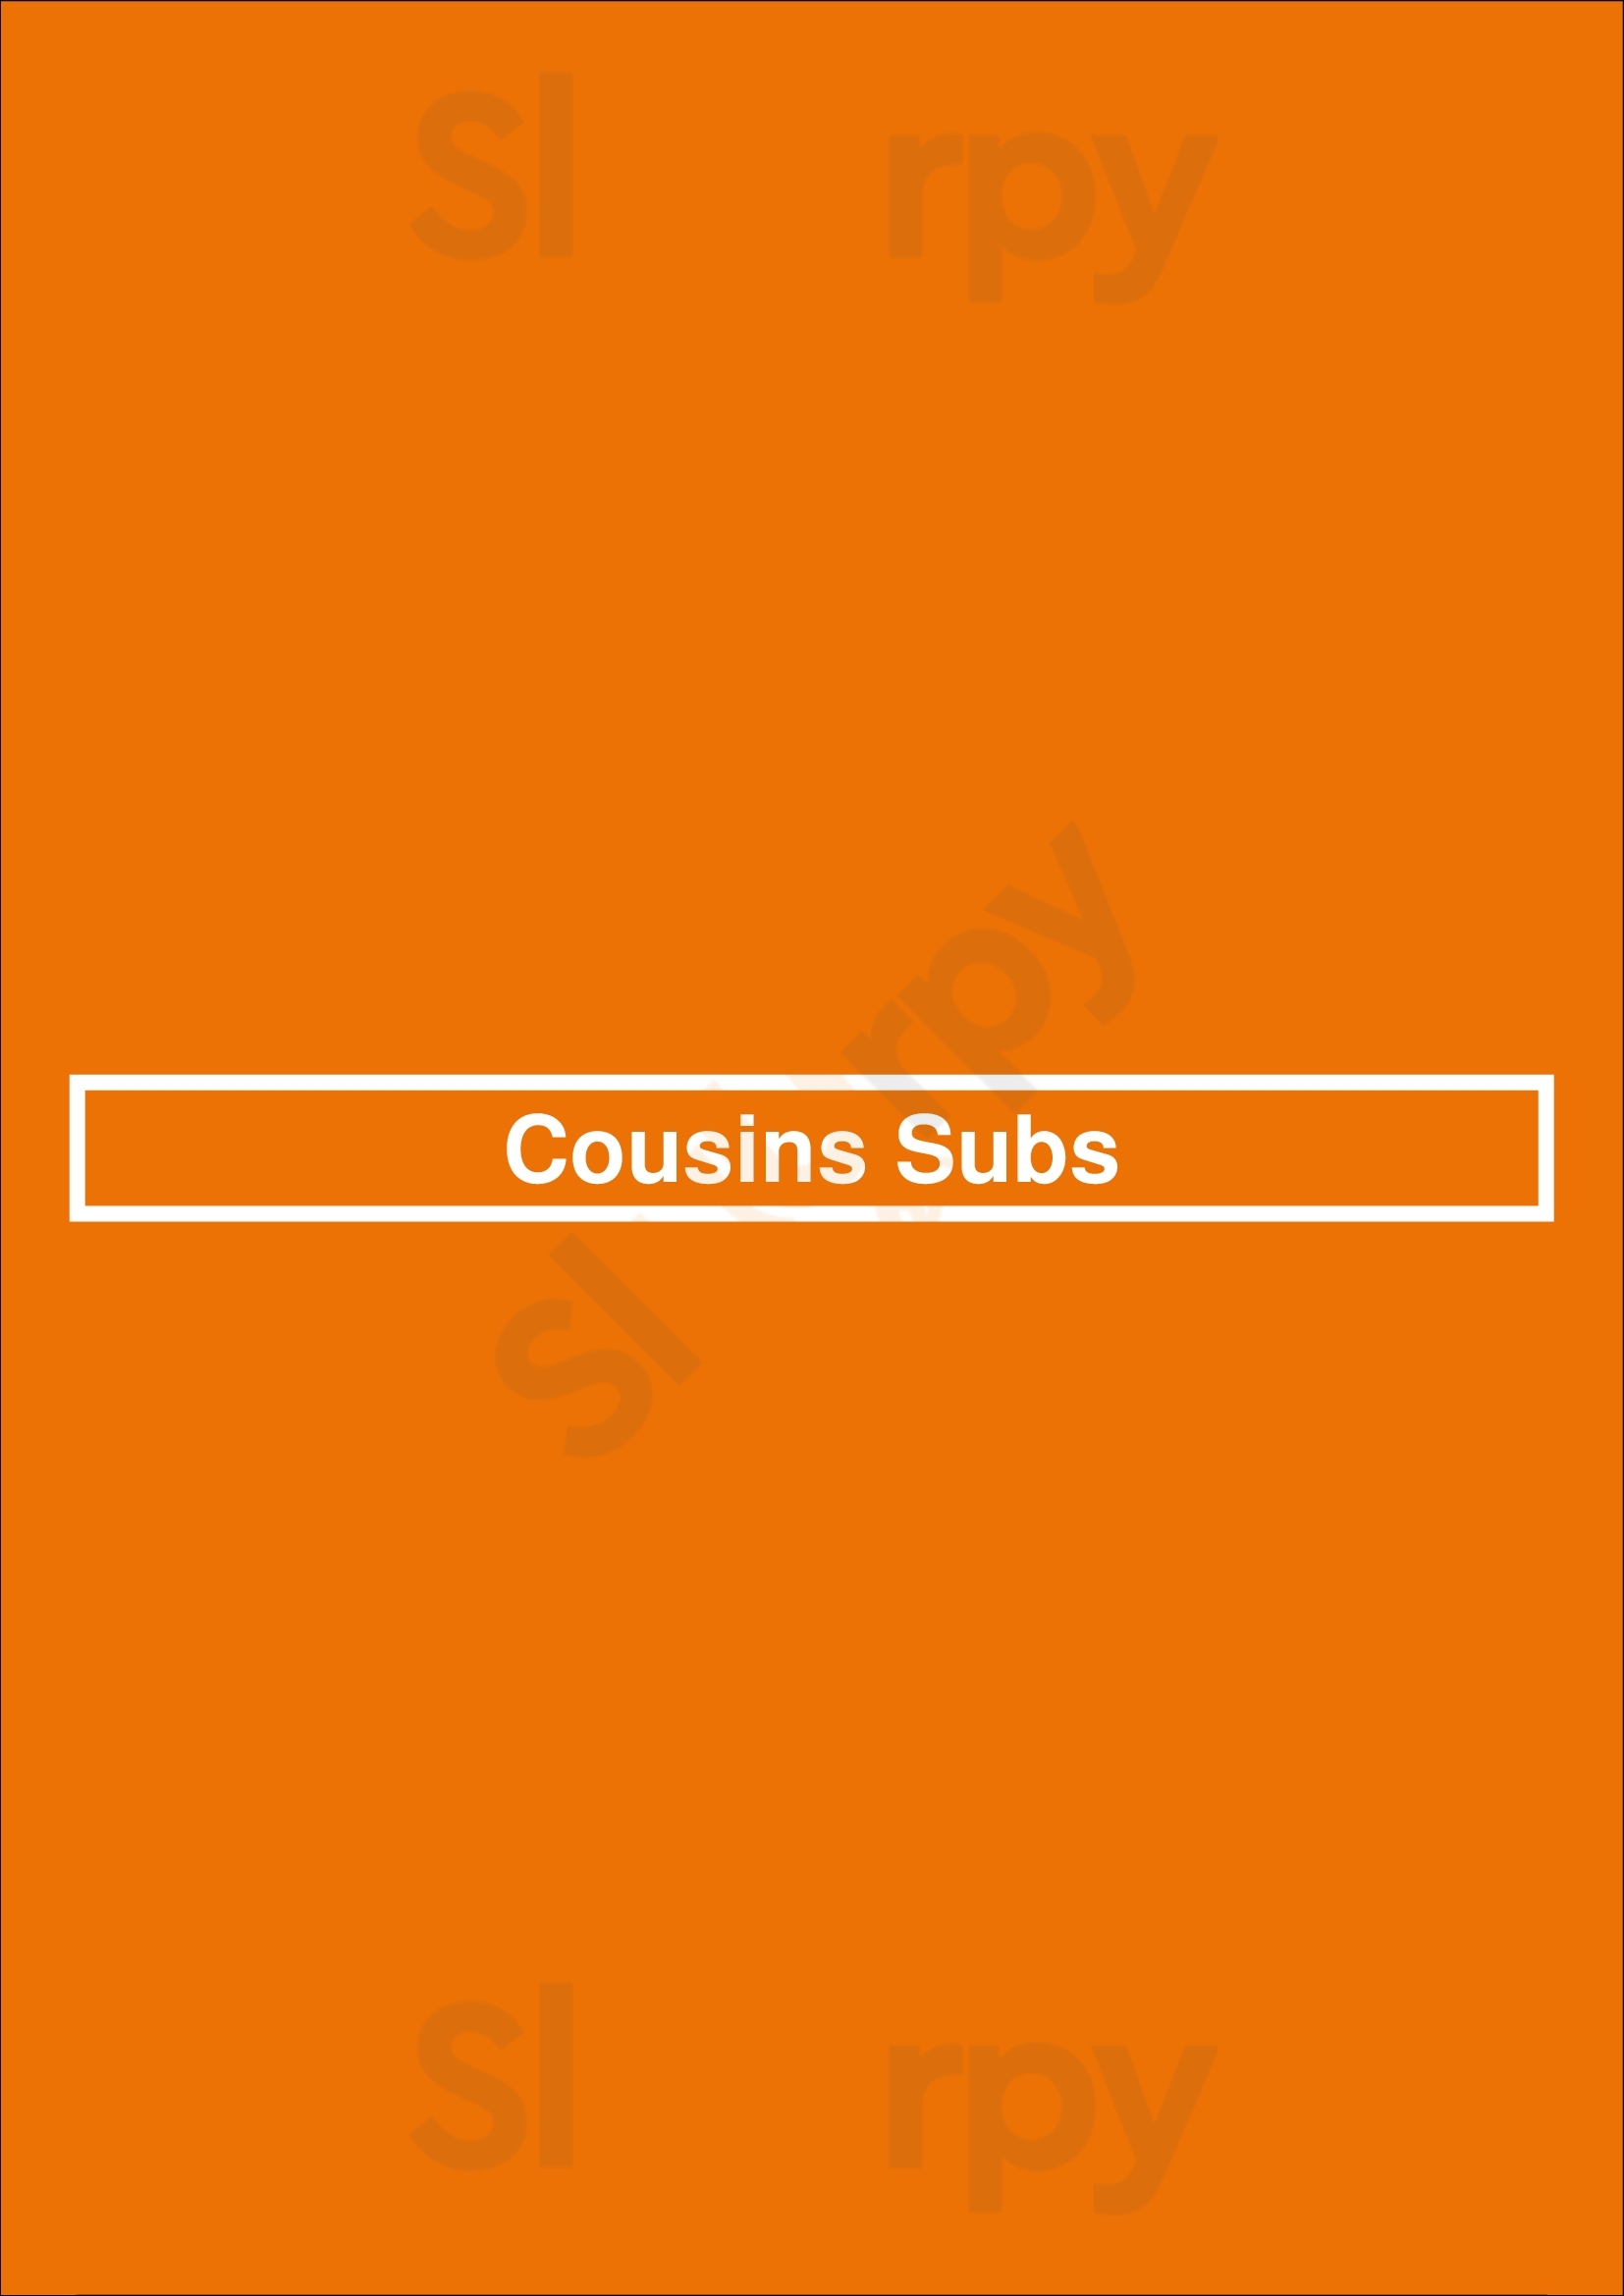 Cousins Subs Milwaukee Menu - 1